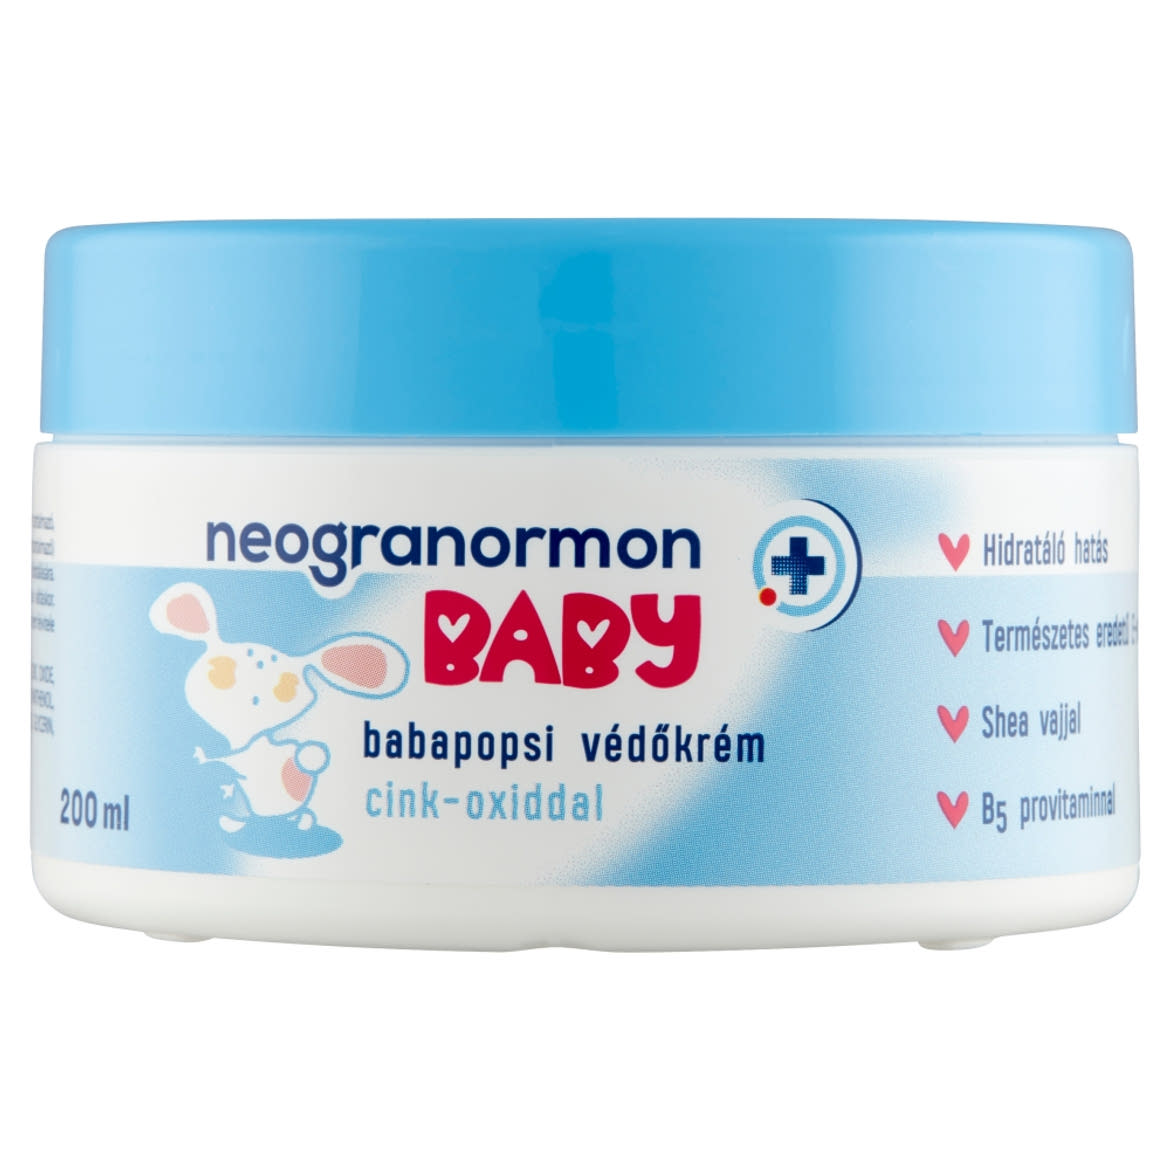 Neogranormon Baby babapopsi védőkrém cink-oxiddal